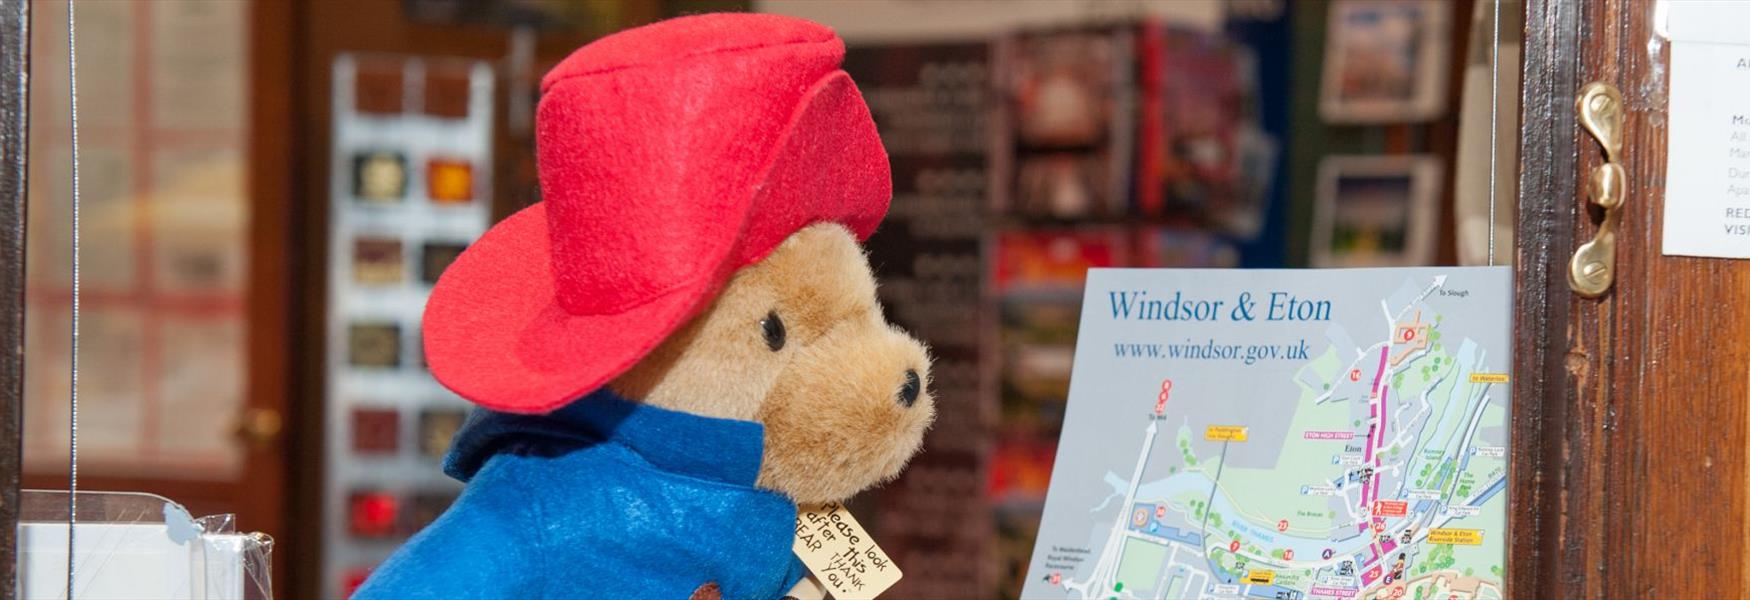 Paddington Bear found our free map invaluable!